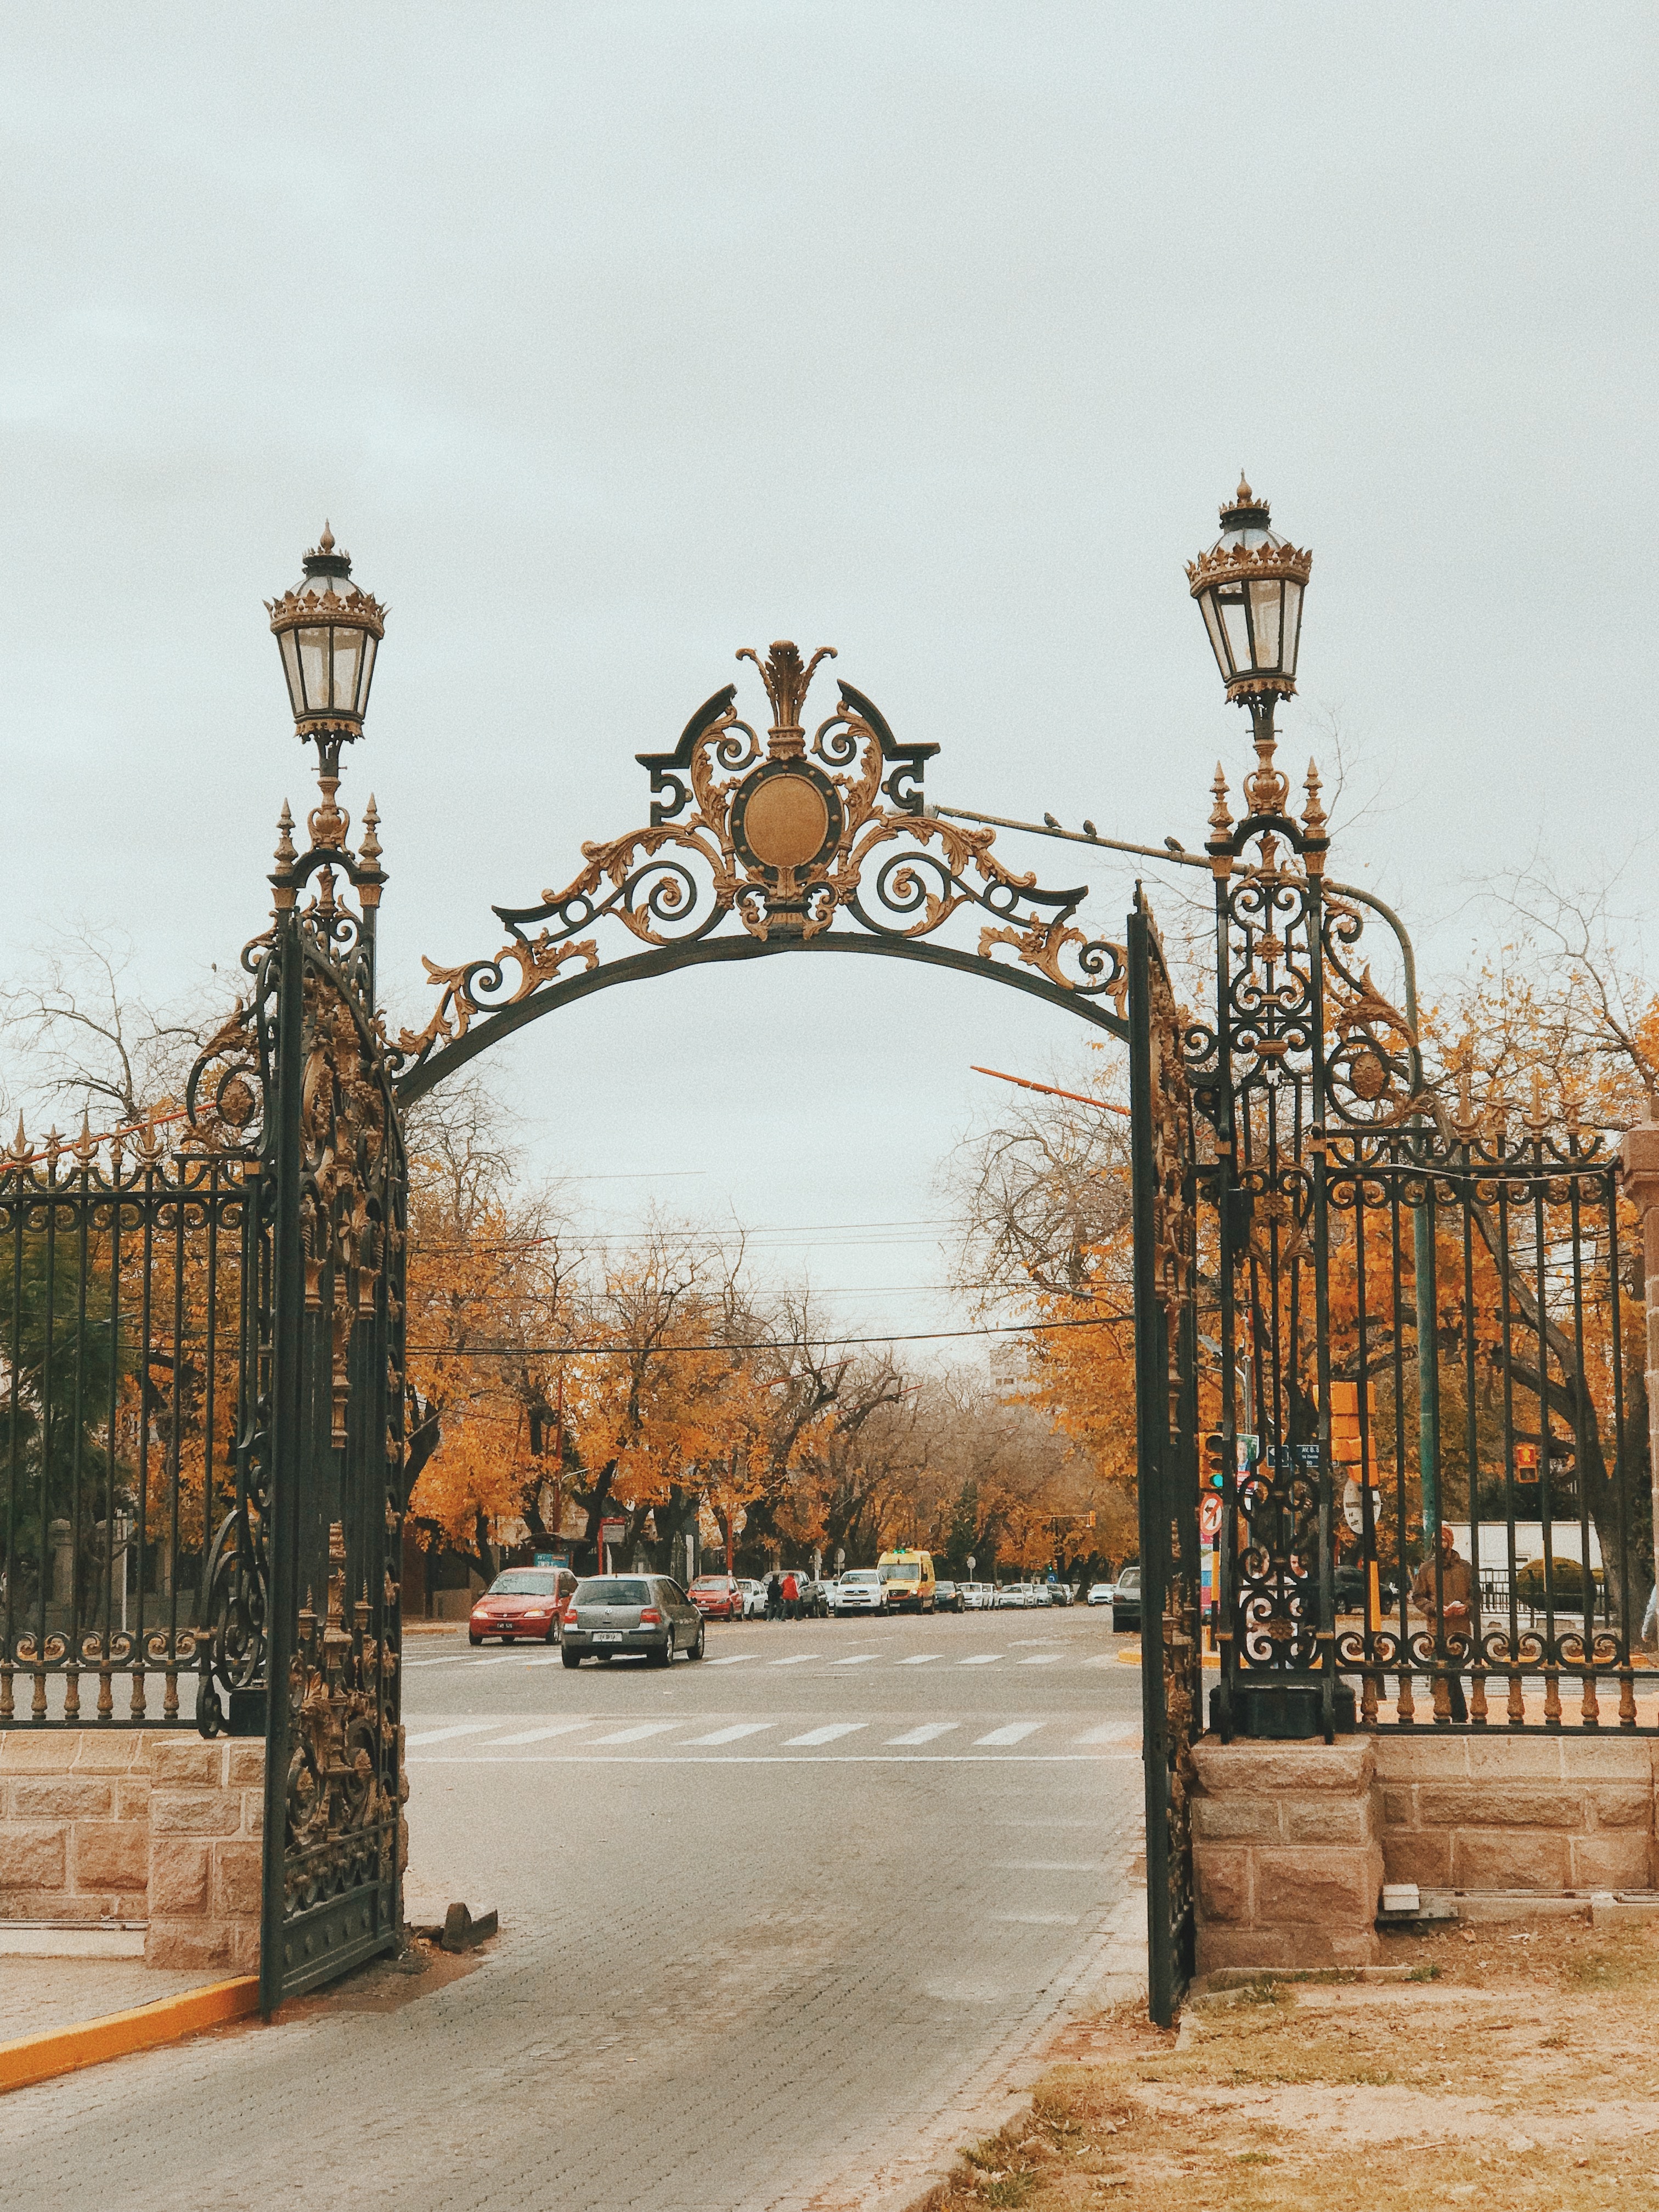 Iron gates at the entrance to General San Martin Park in Mendoza, Argentina.